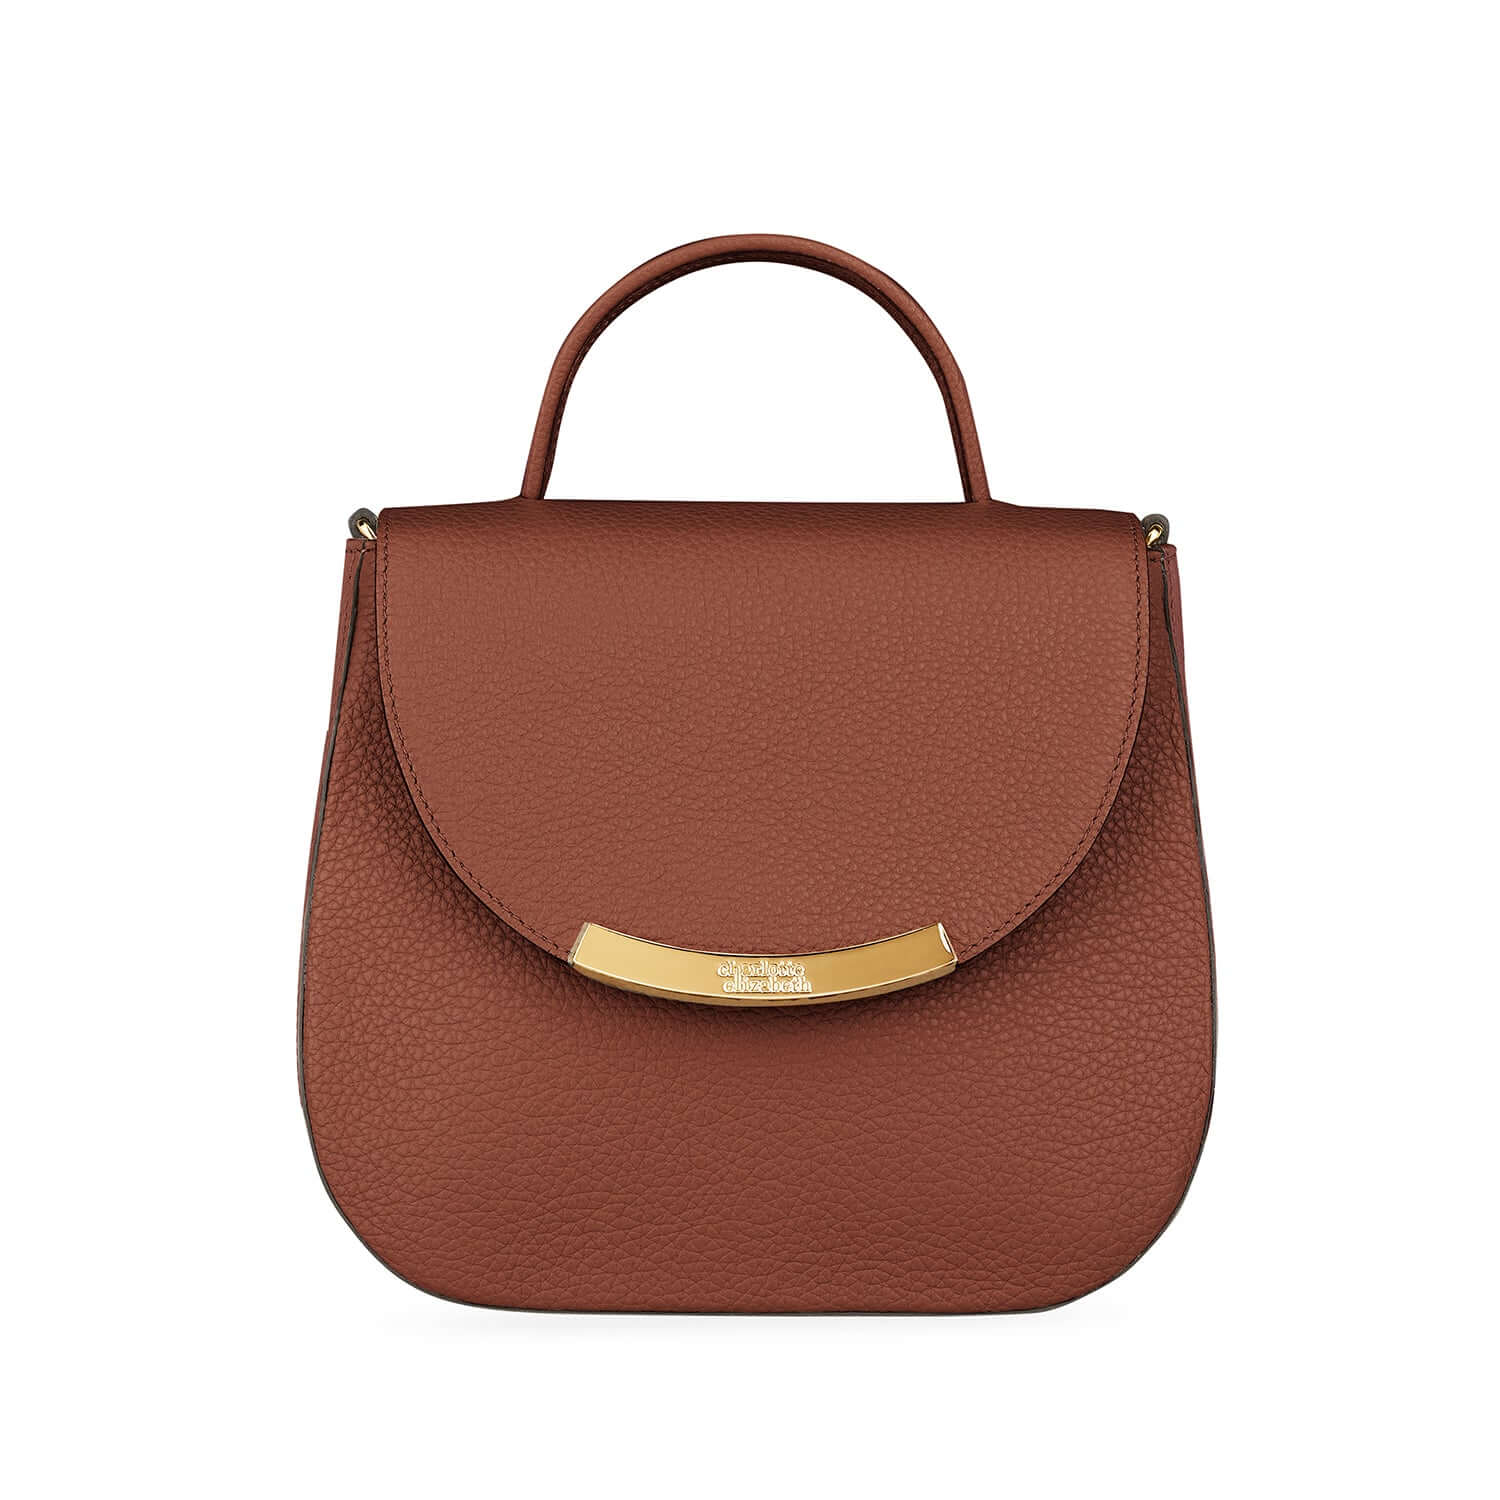 Top handle womens brown leather mini handbag crossbody